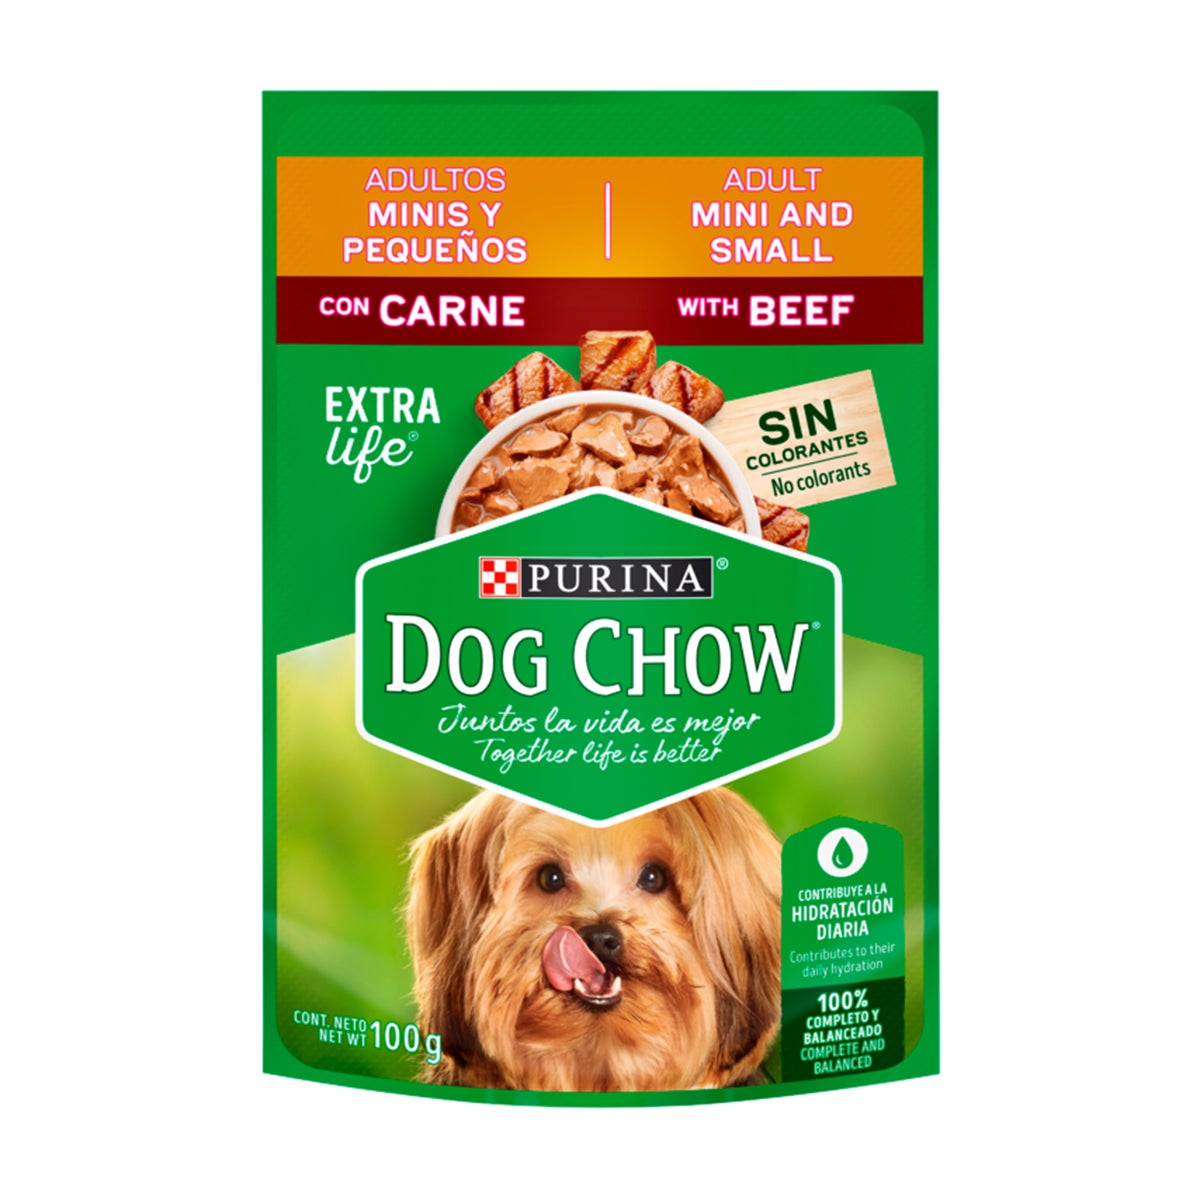 purina-dog-chow-adultos-minis-y-peque%C3%B1os-con-carne.jpg